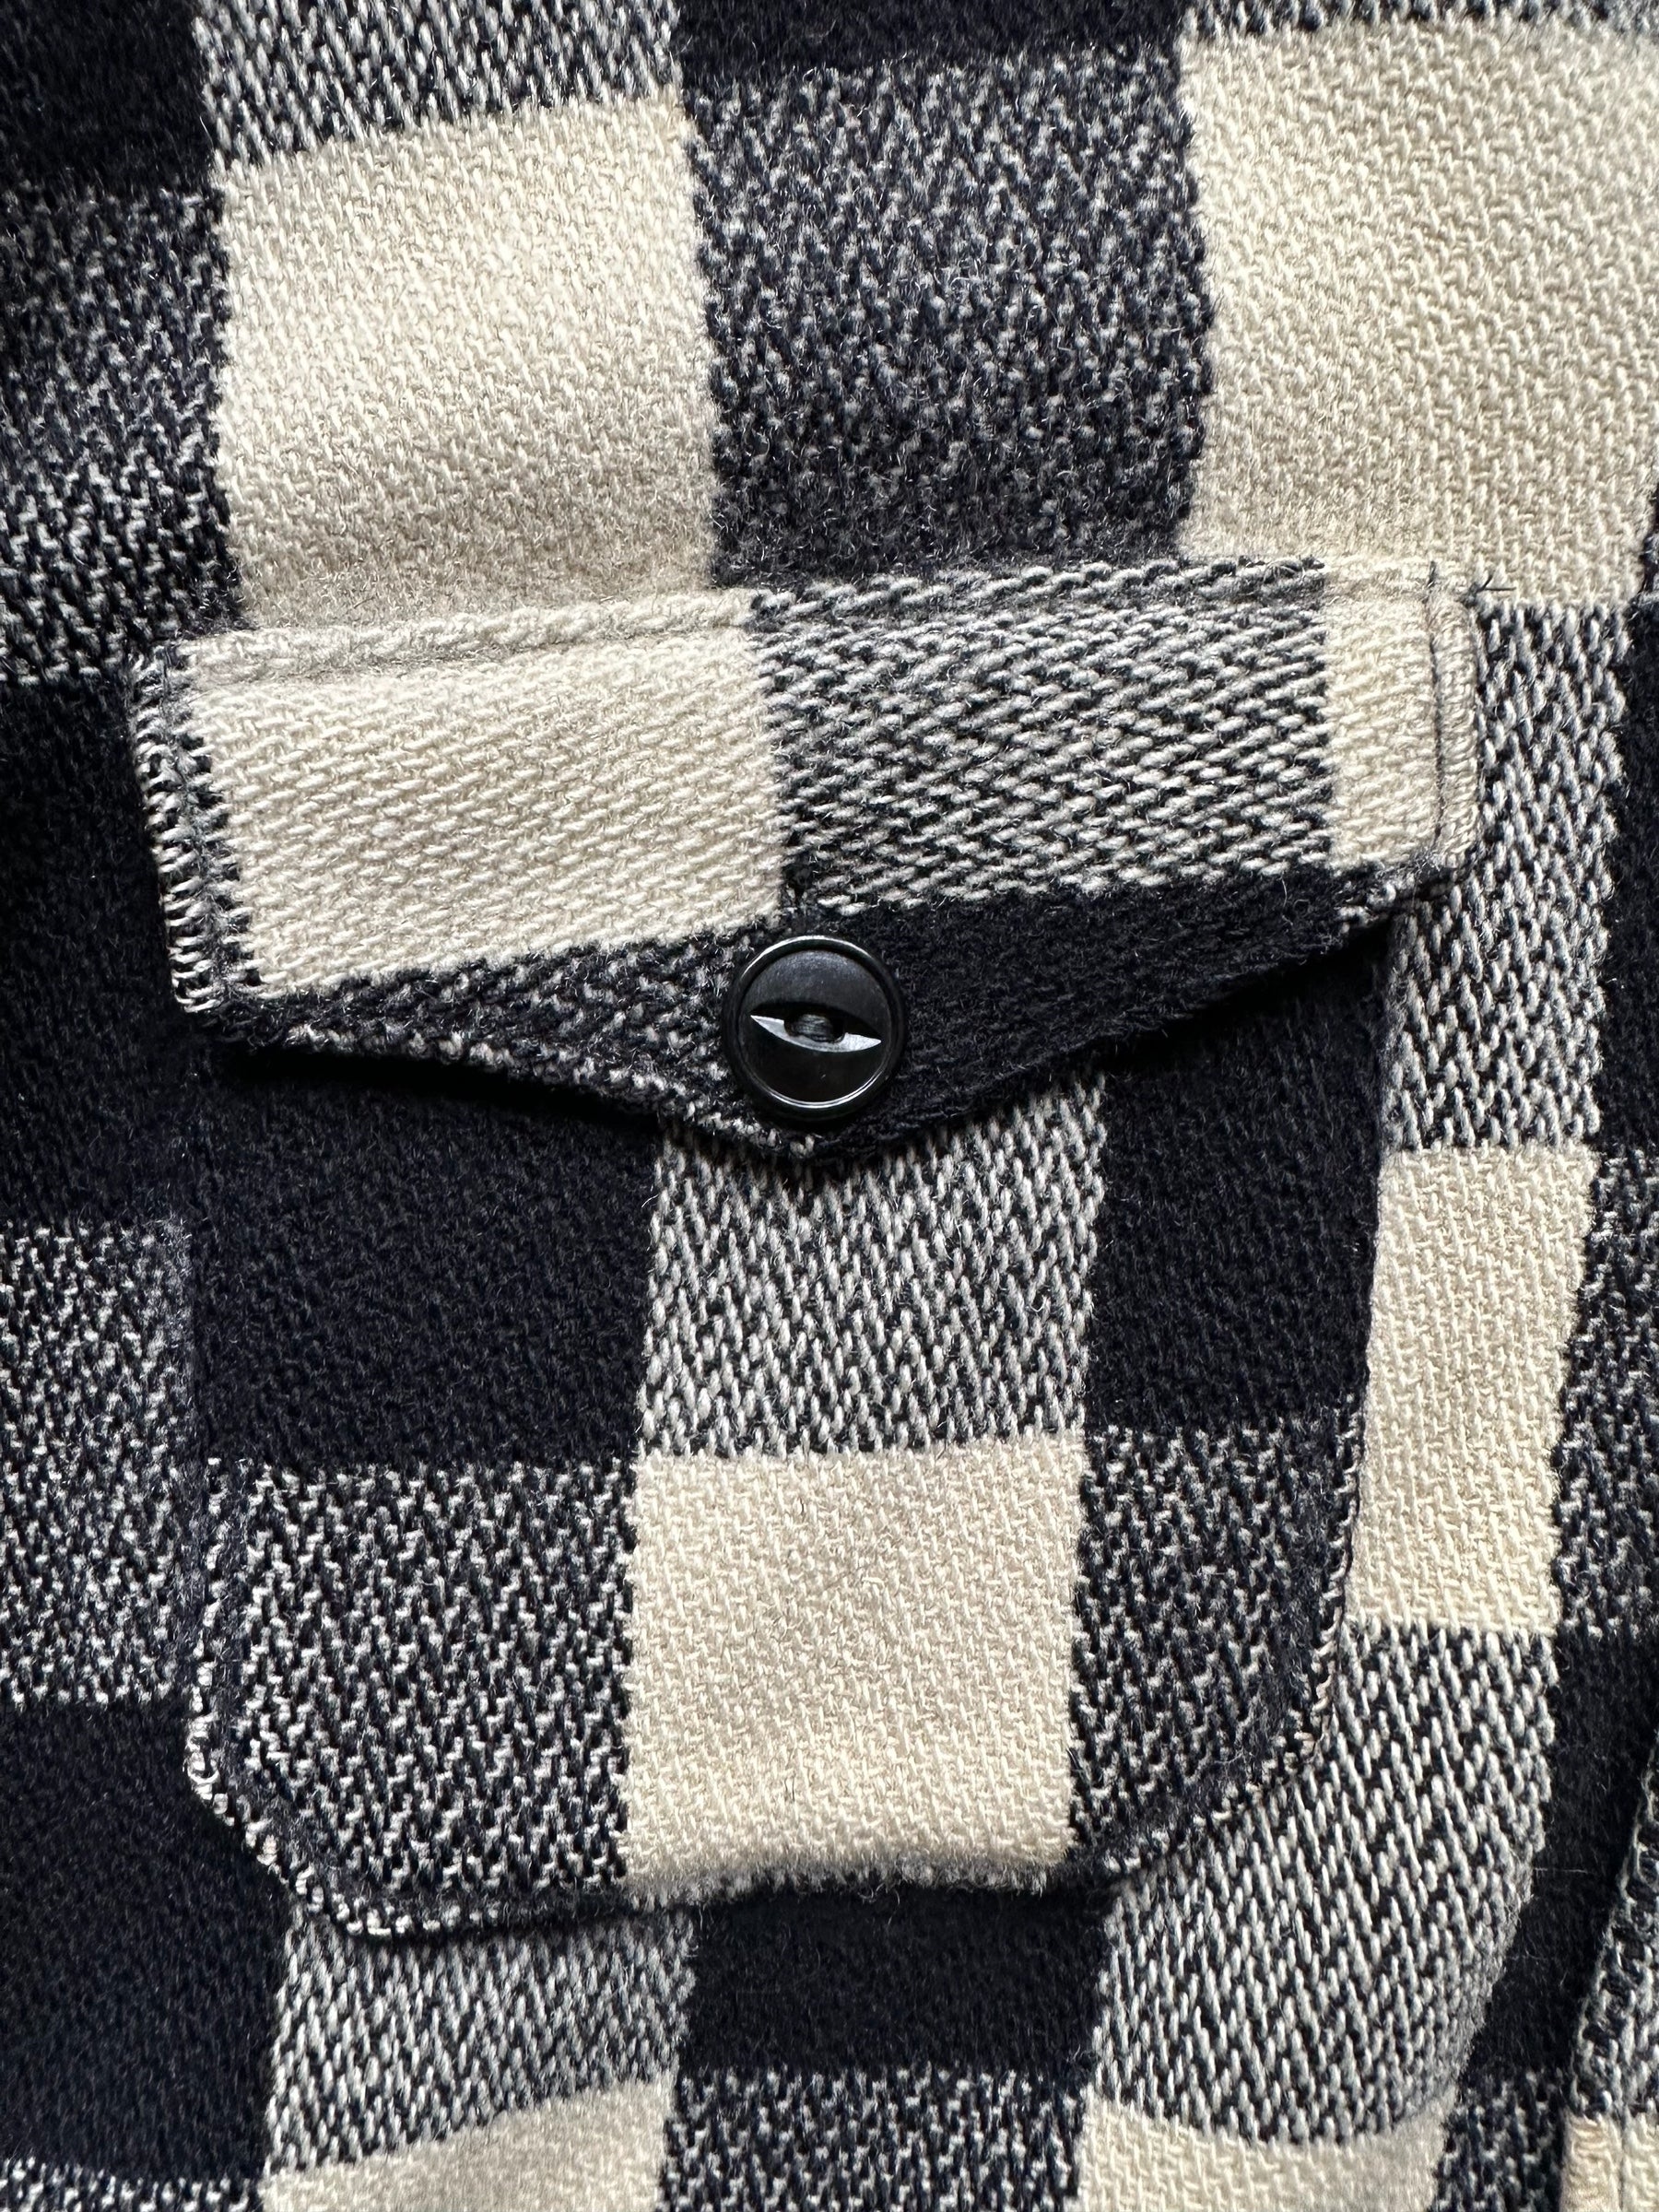 Pocket View of Vintage 1930-40s Era Woolrich Black & White Wool Jacket SZ L |  Barn Owl Vintage Goods | Vintage Workwear Seattle